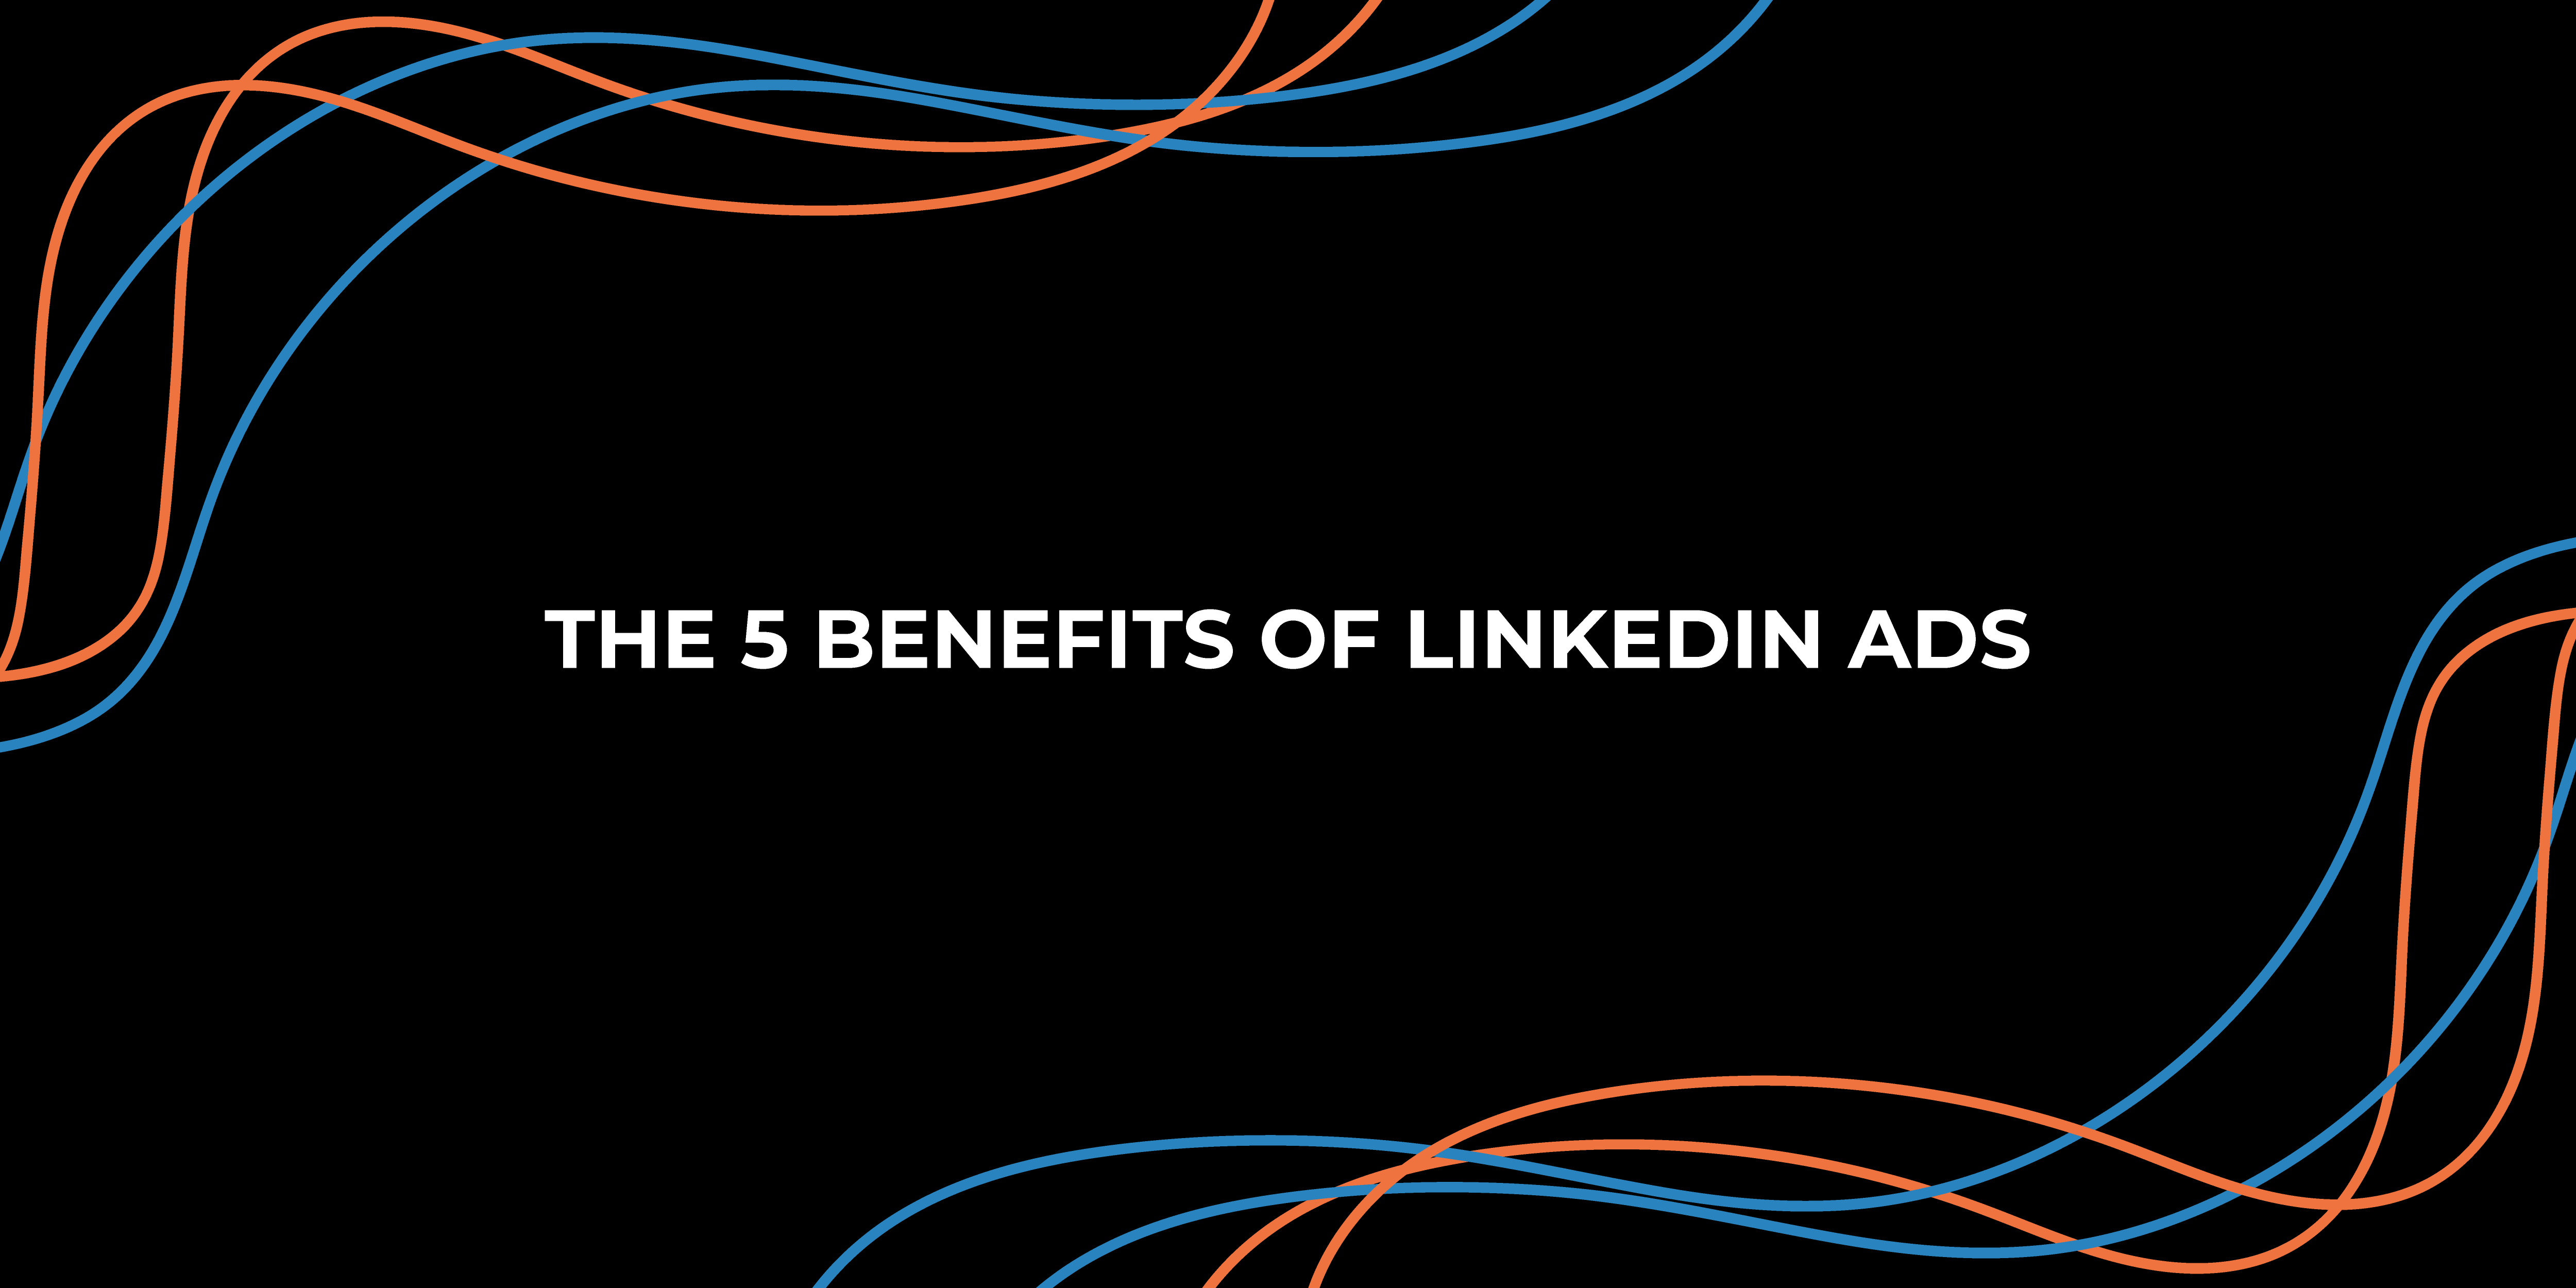 The 5 Benefits of LinkedIn Ads